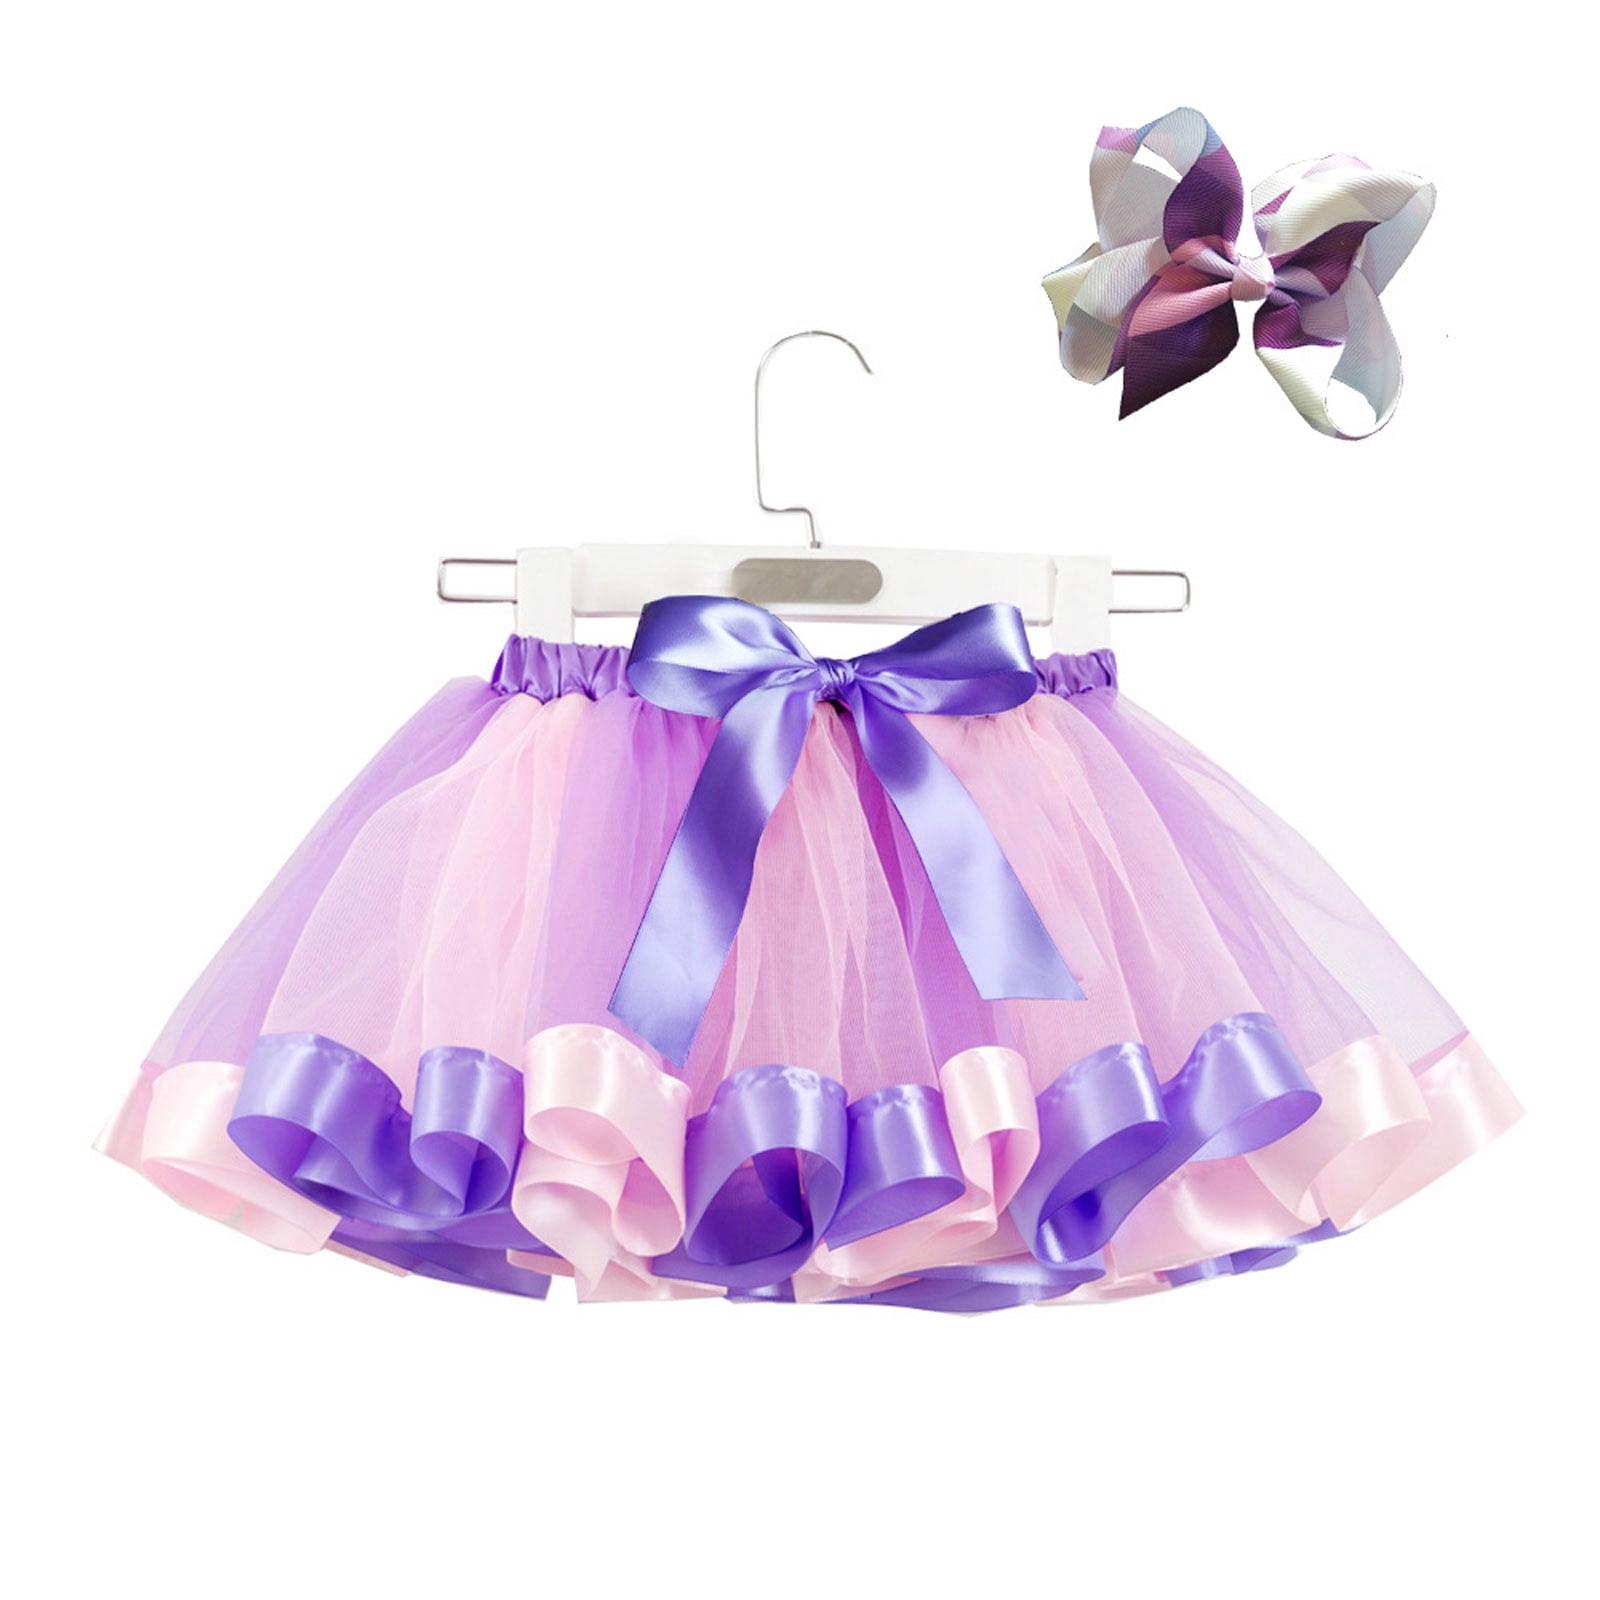 UMFun Kids Girls Tutu Party Dance Ballet Skirt Toddler Rainbow Colors Skirt+Bow Hairpin Set 